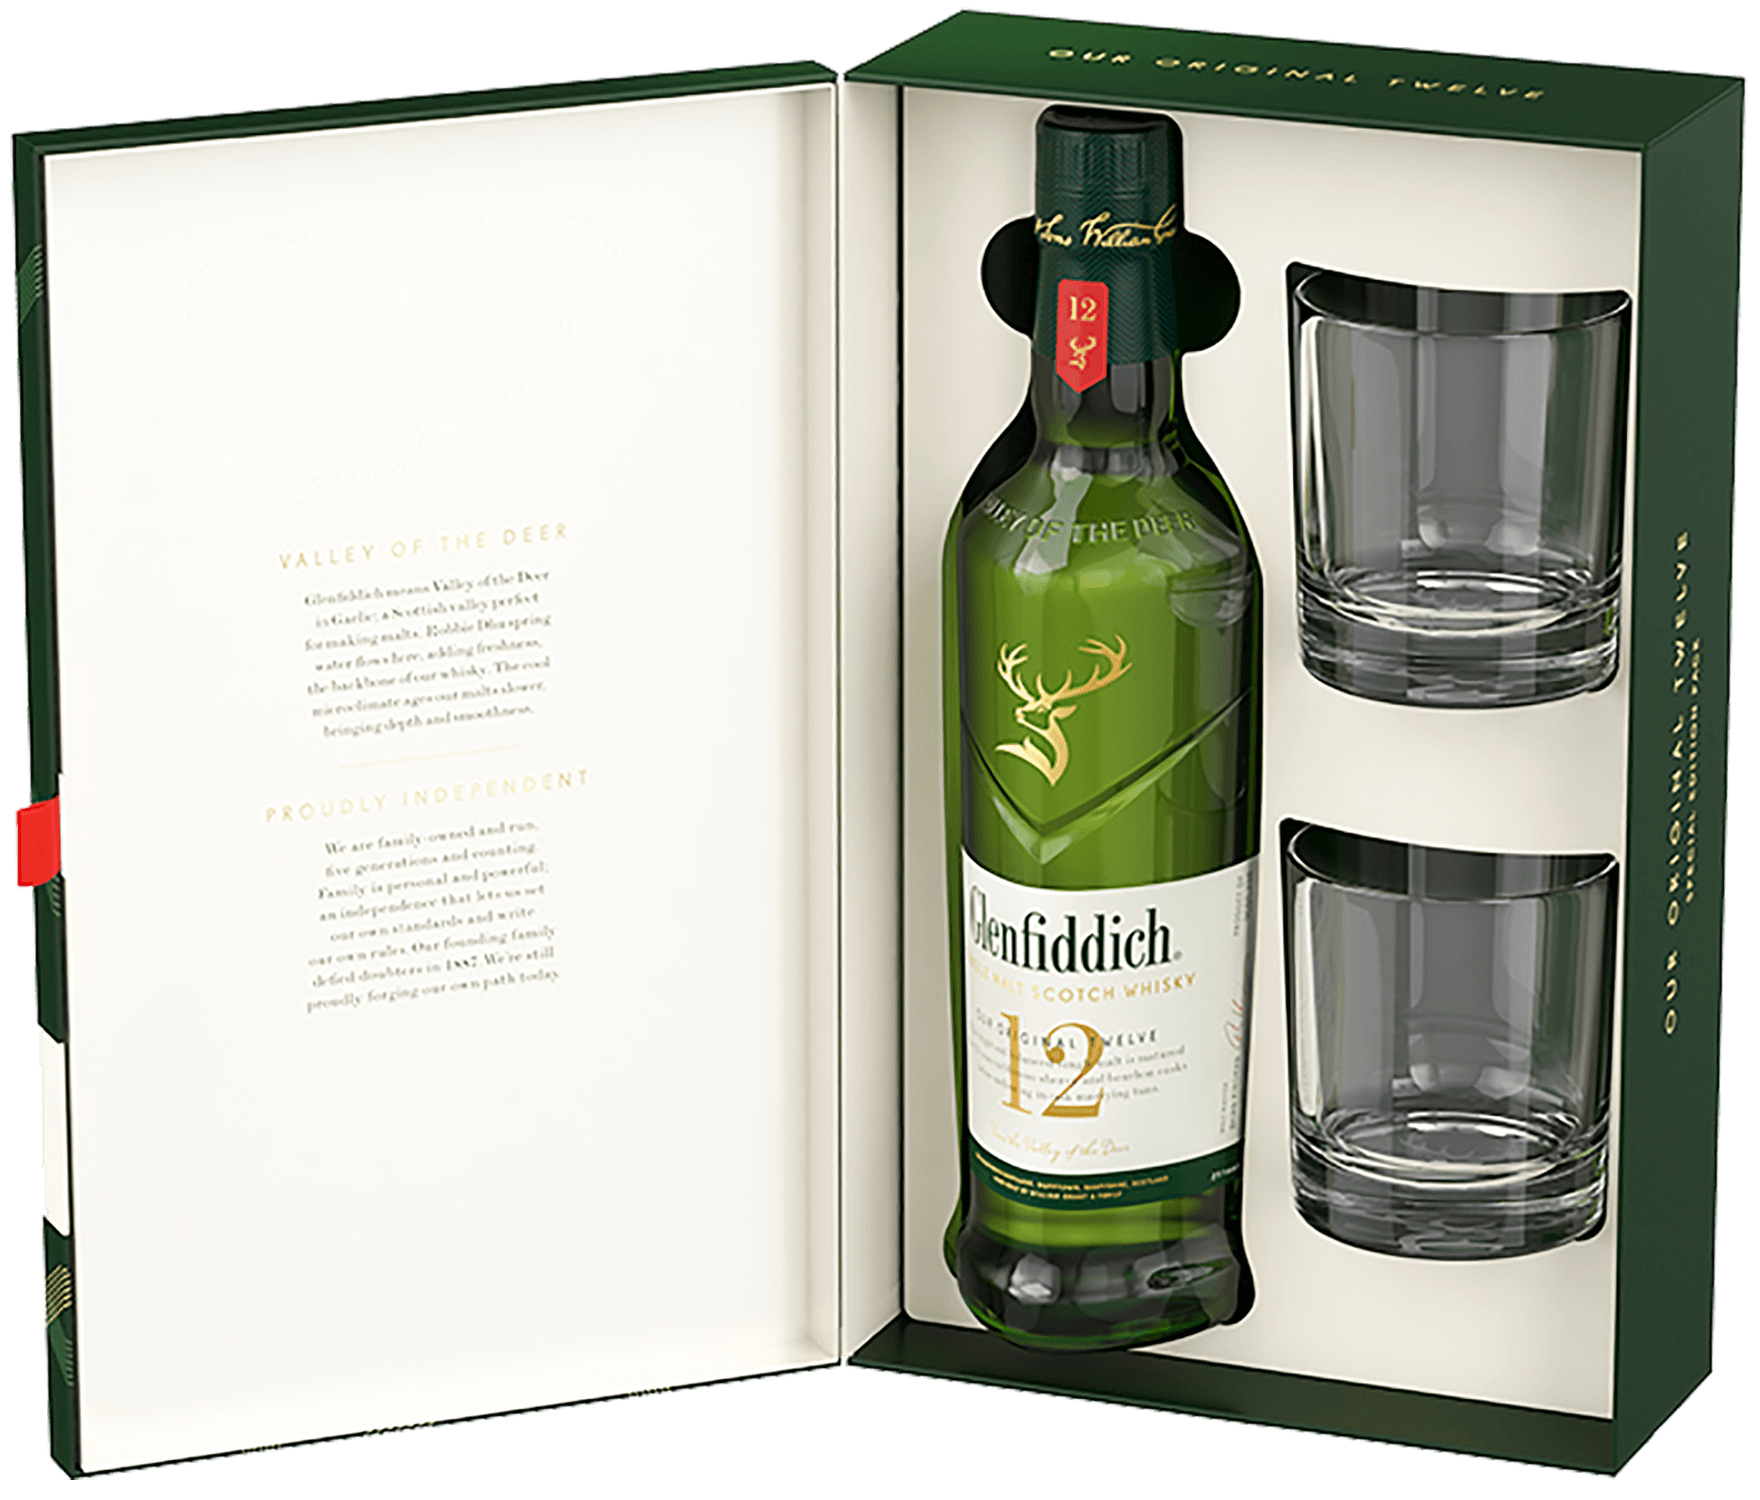 Glenfiddich Single Malt Scotch Whisky 12 y.o. (gift box with 2 glasses)